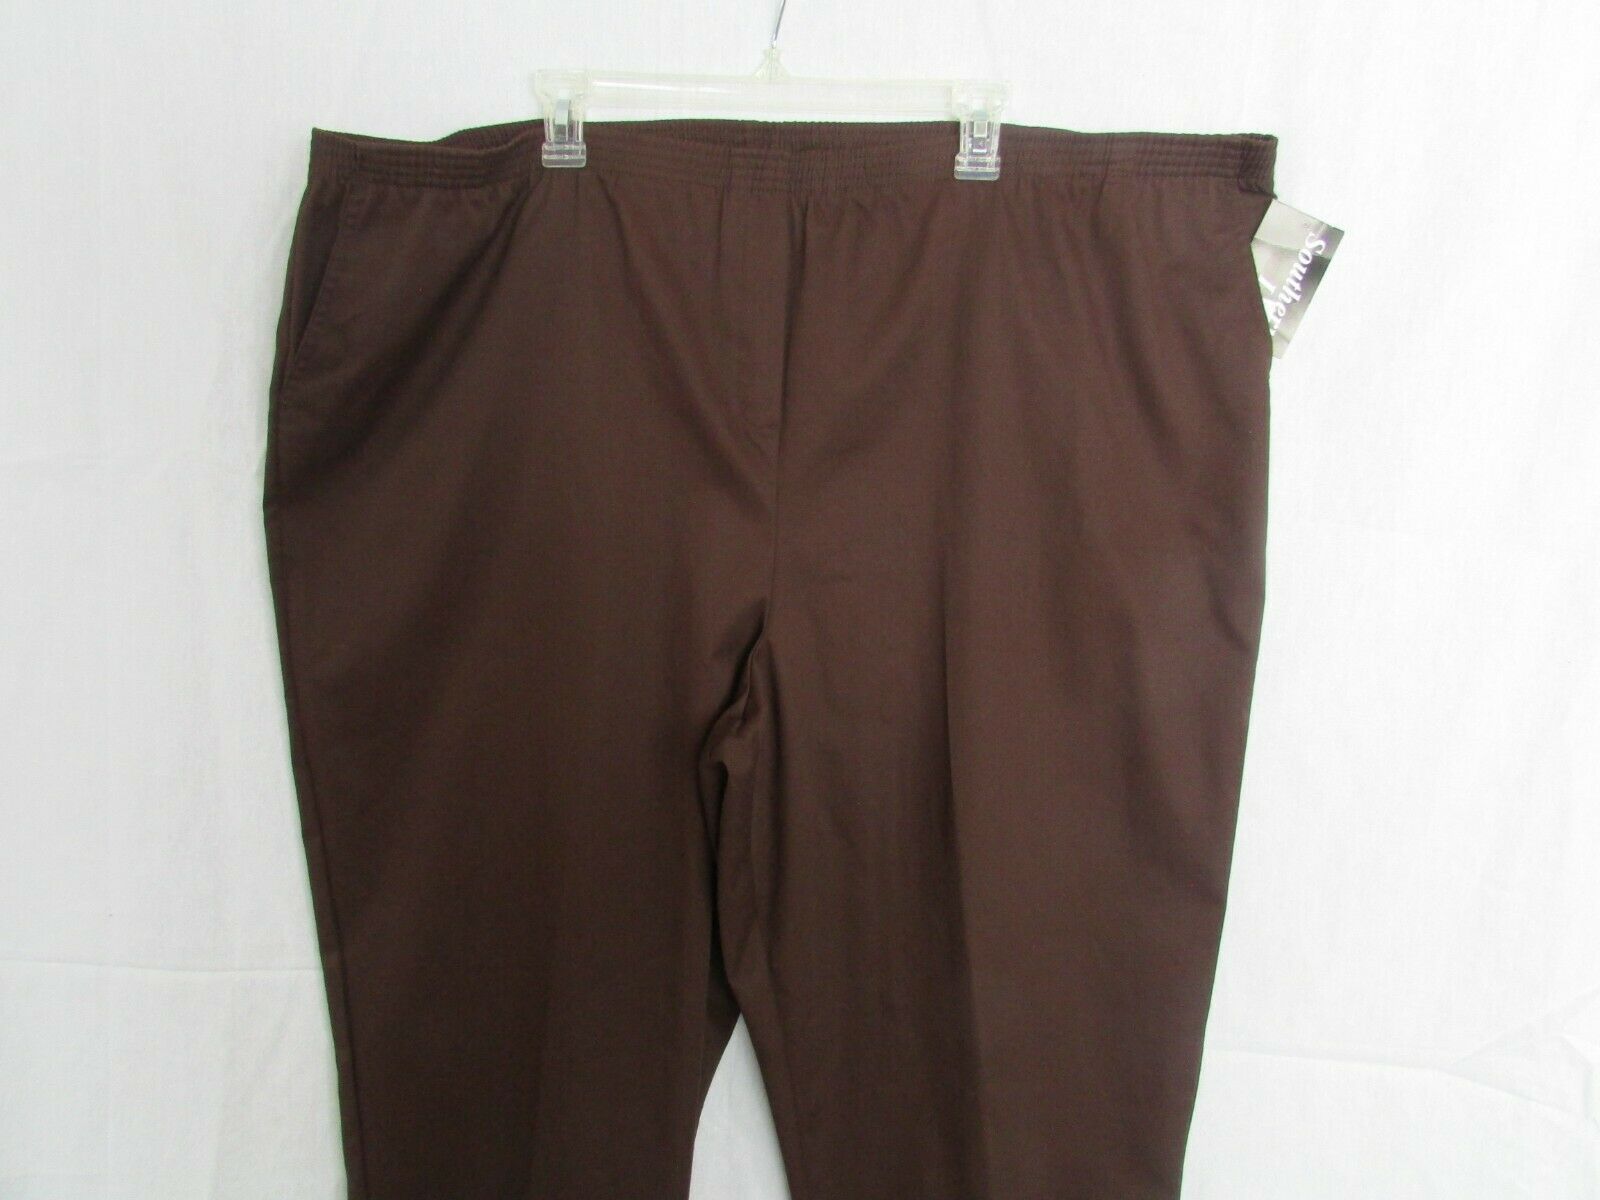 Women's Southern Lady casual pants size 3X, Brown, elastic waist - Pants